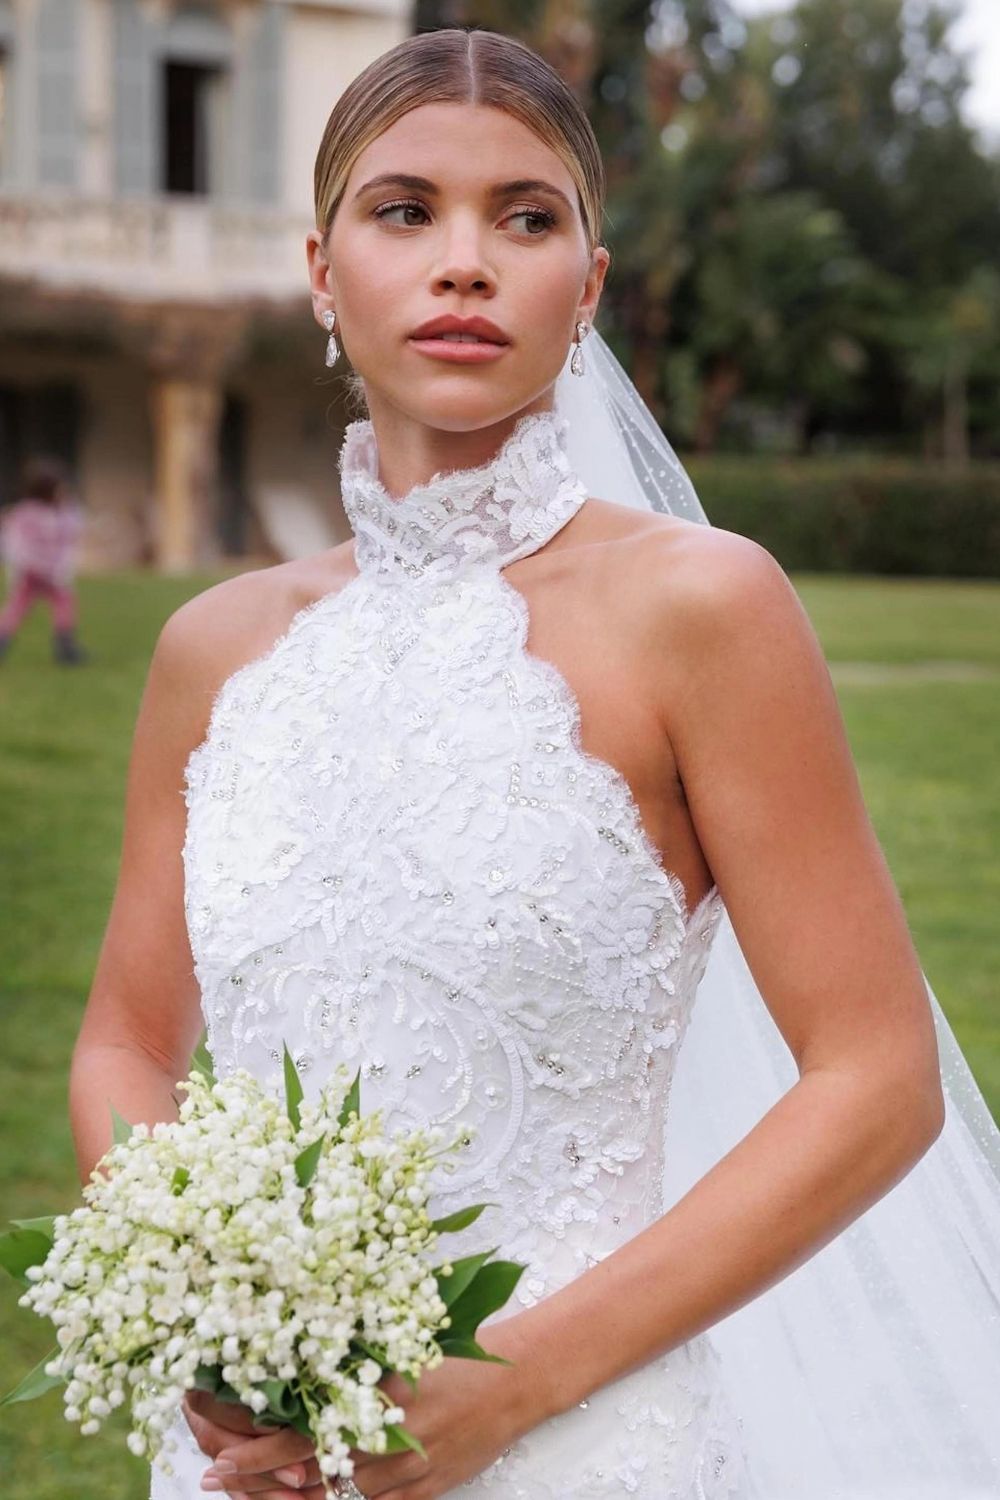 sofia-richie-grainge-chanel-wedding-dress